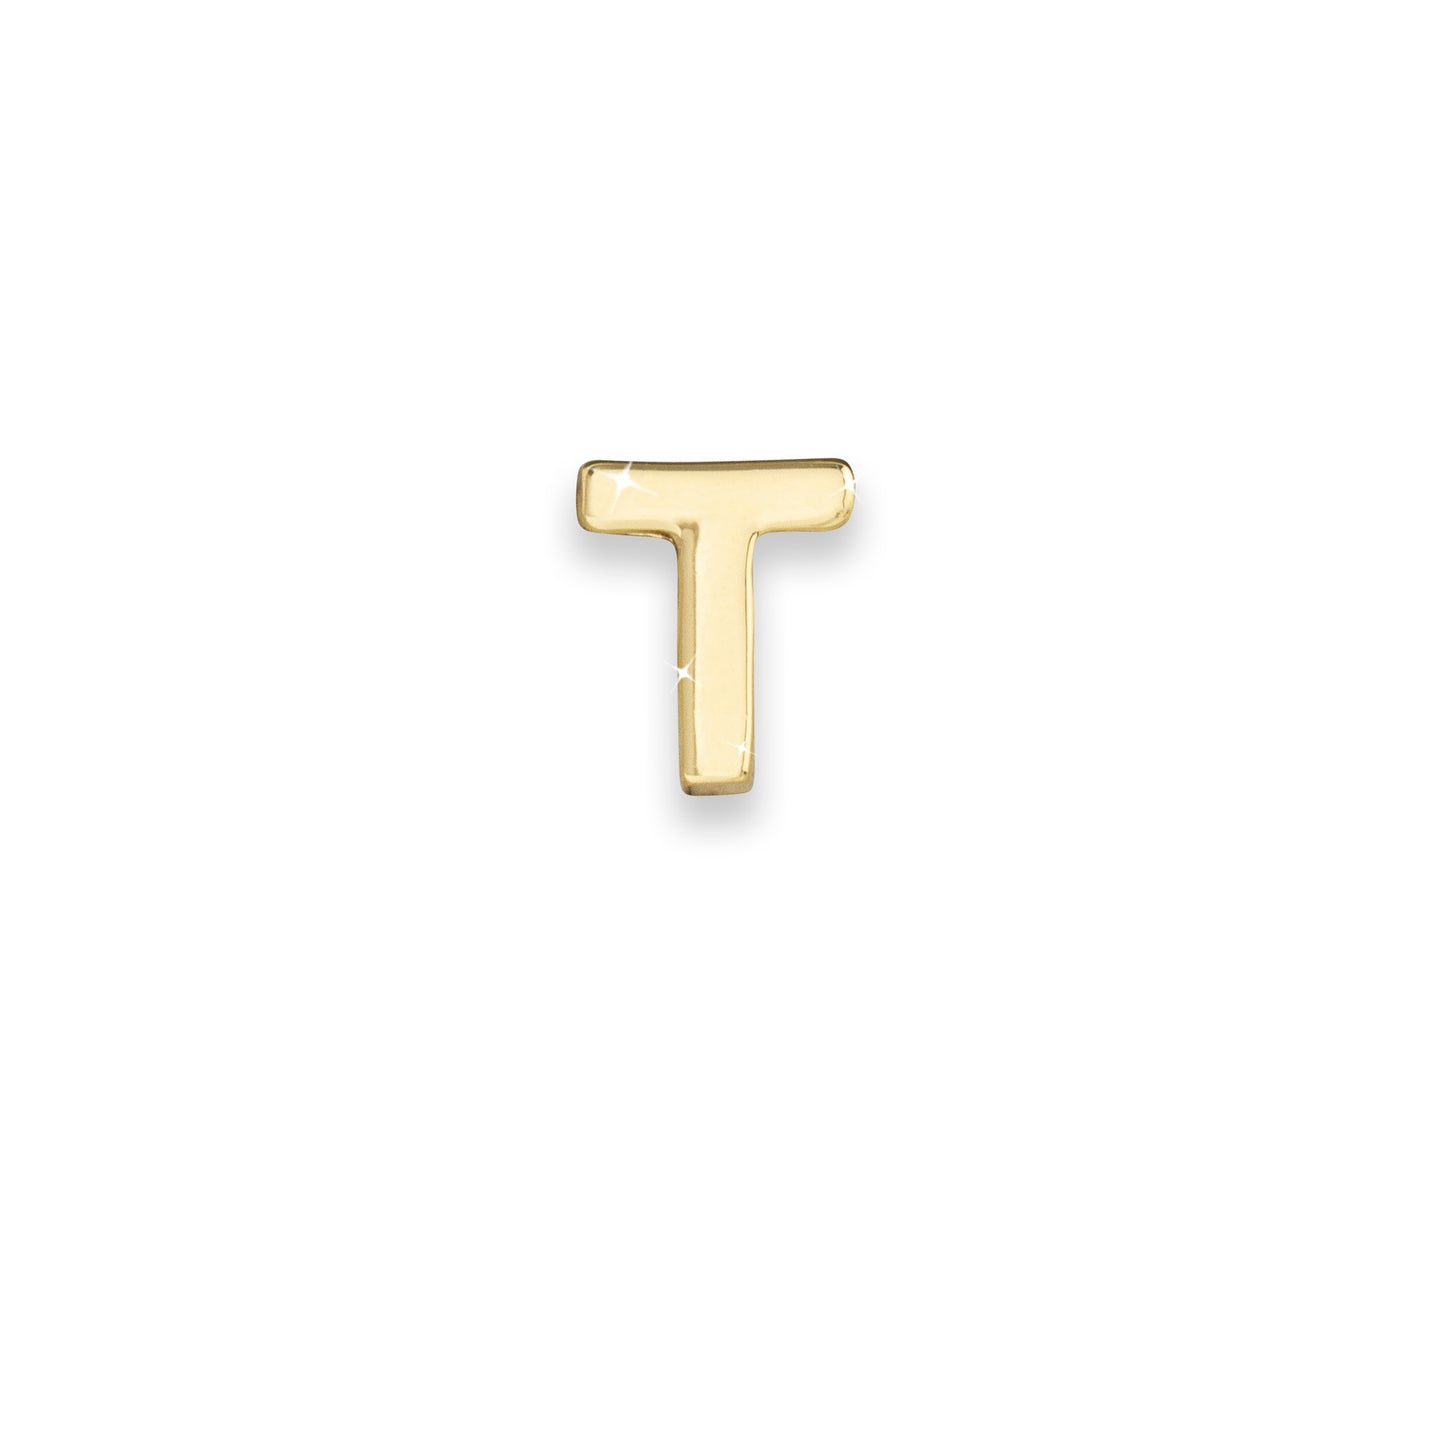 Gold letter T monogram charm for necklaces & bracelets